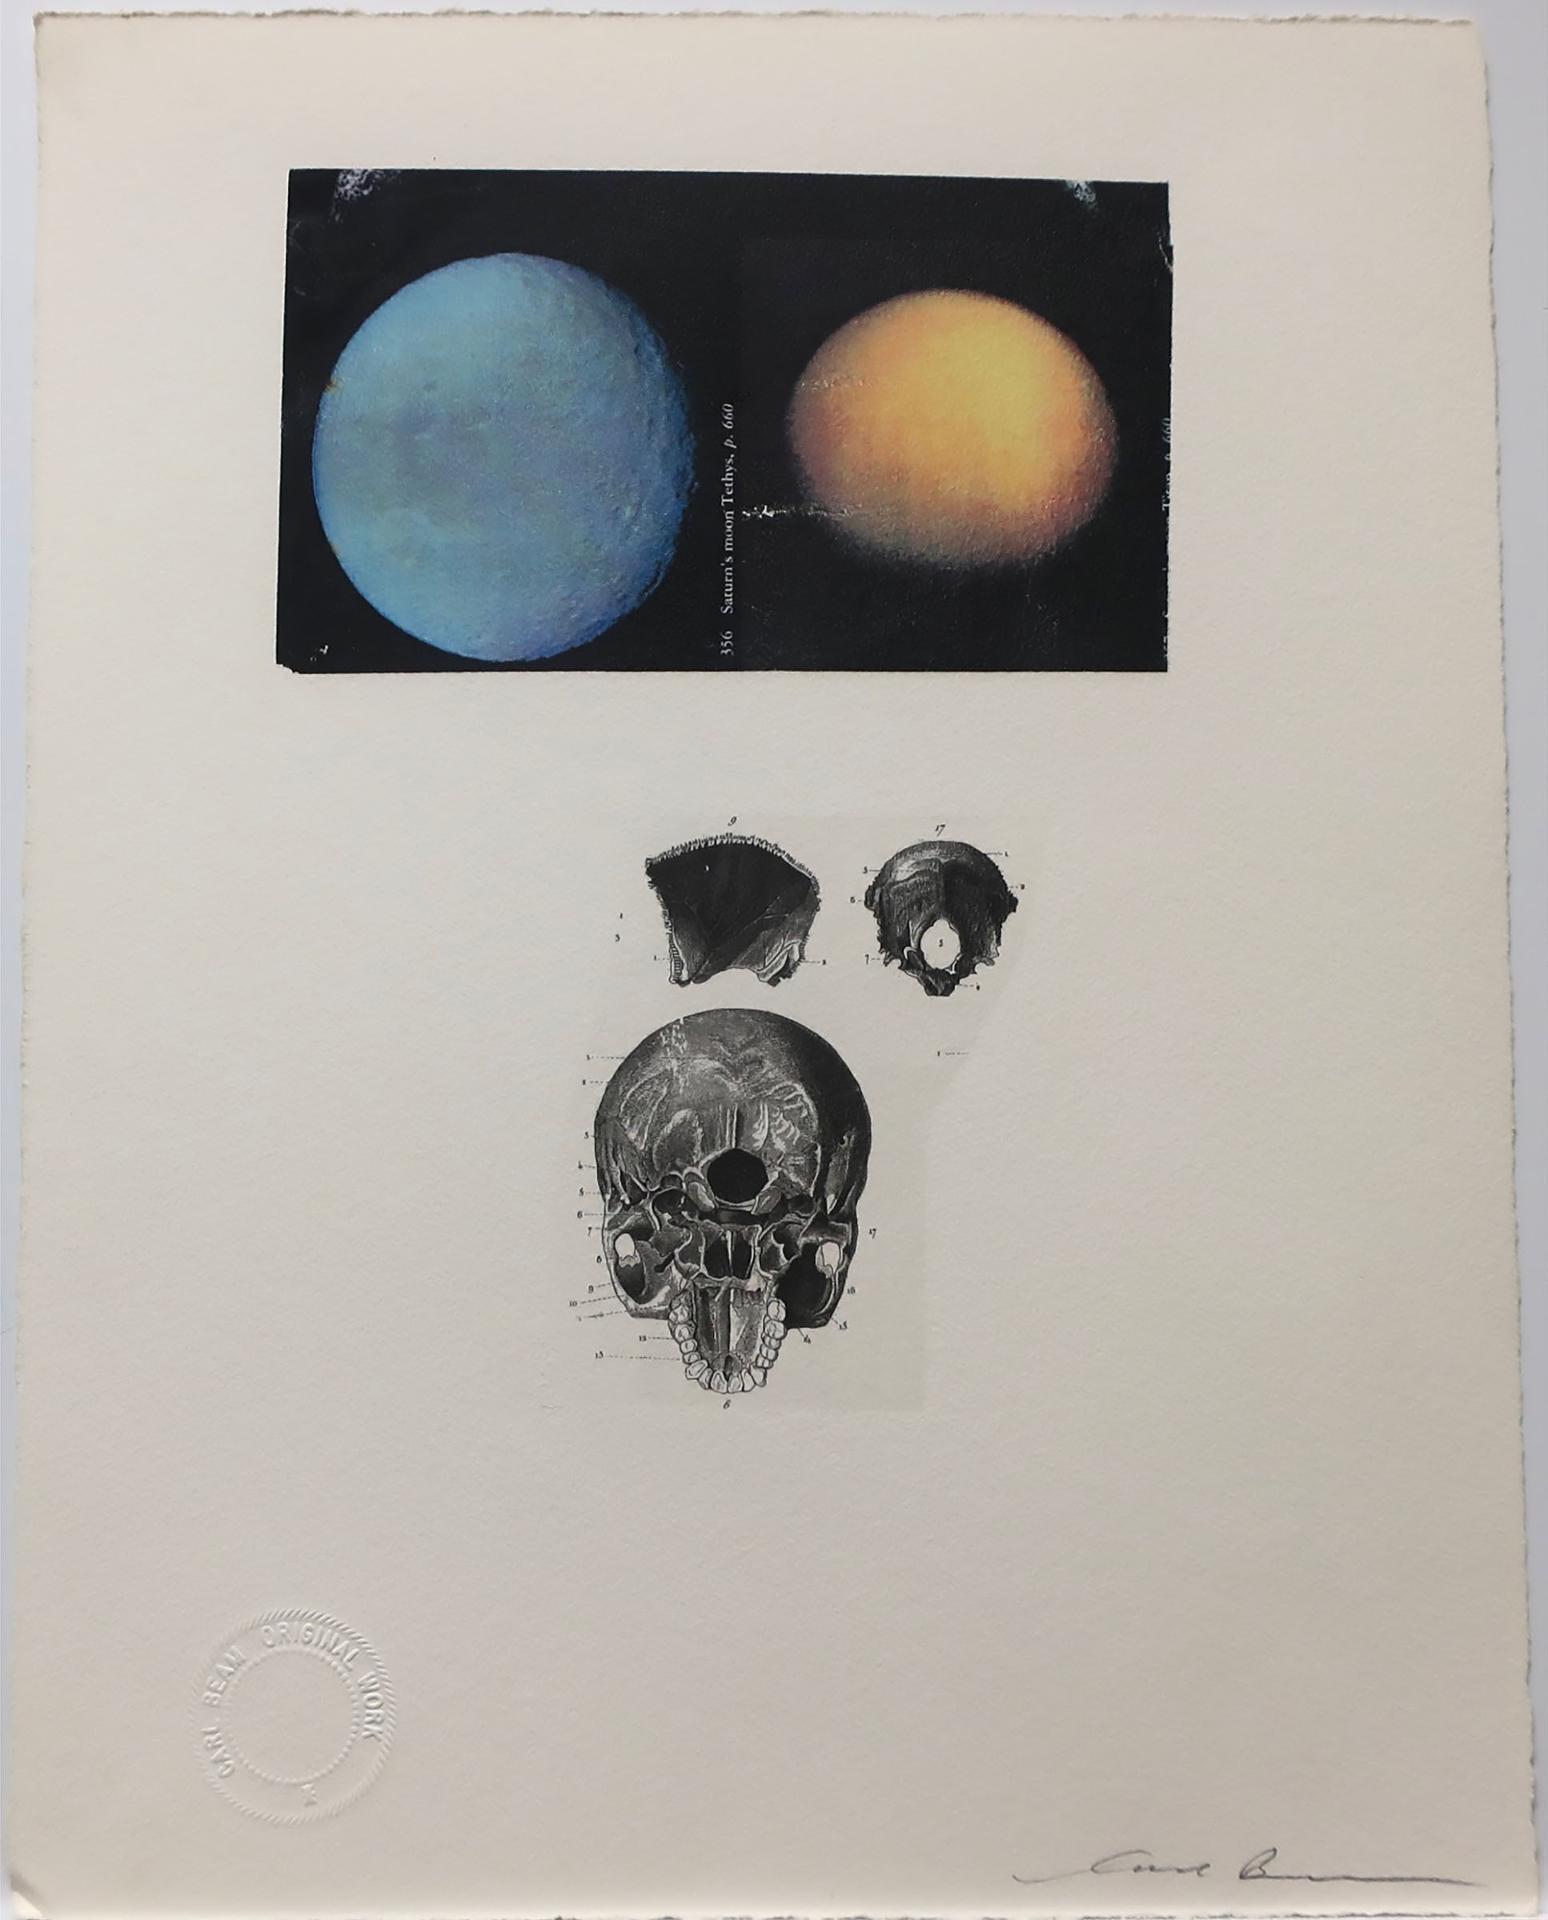 Carl Beam (1943-2005) - Saturn's Moon Thethys/Skull Fragments